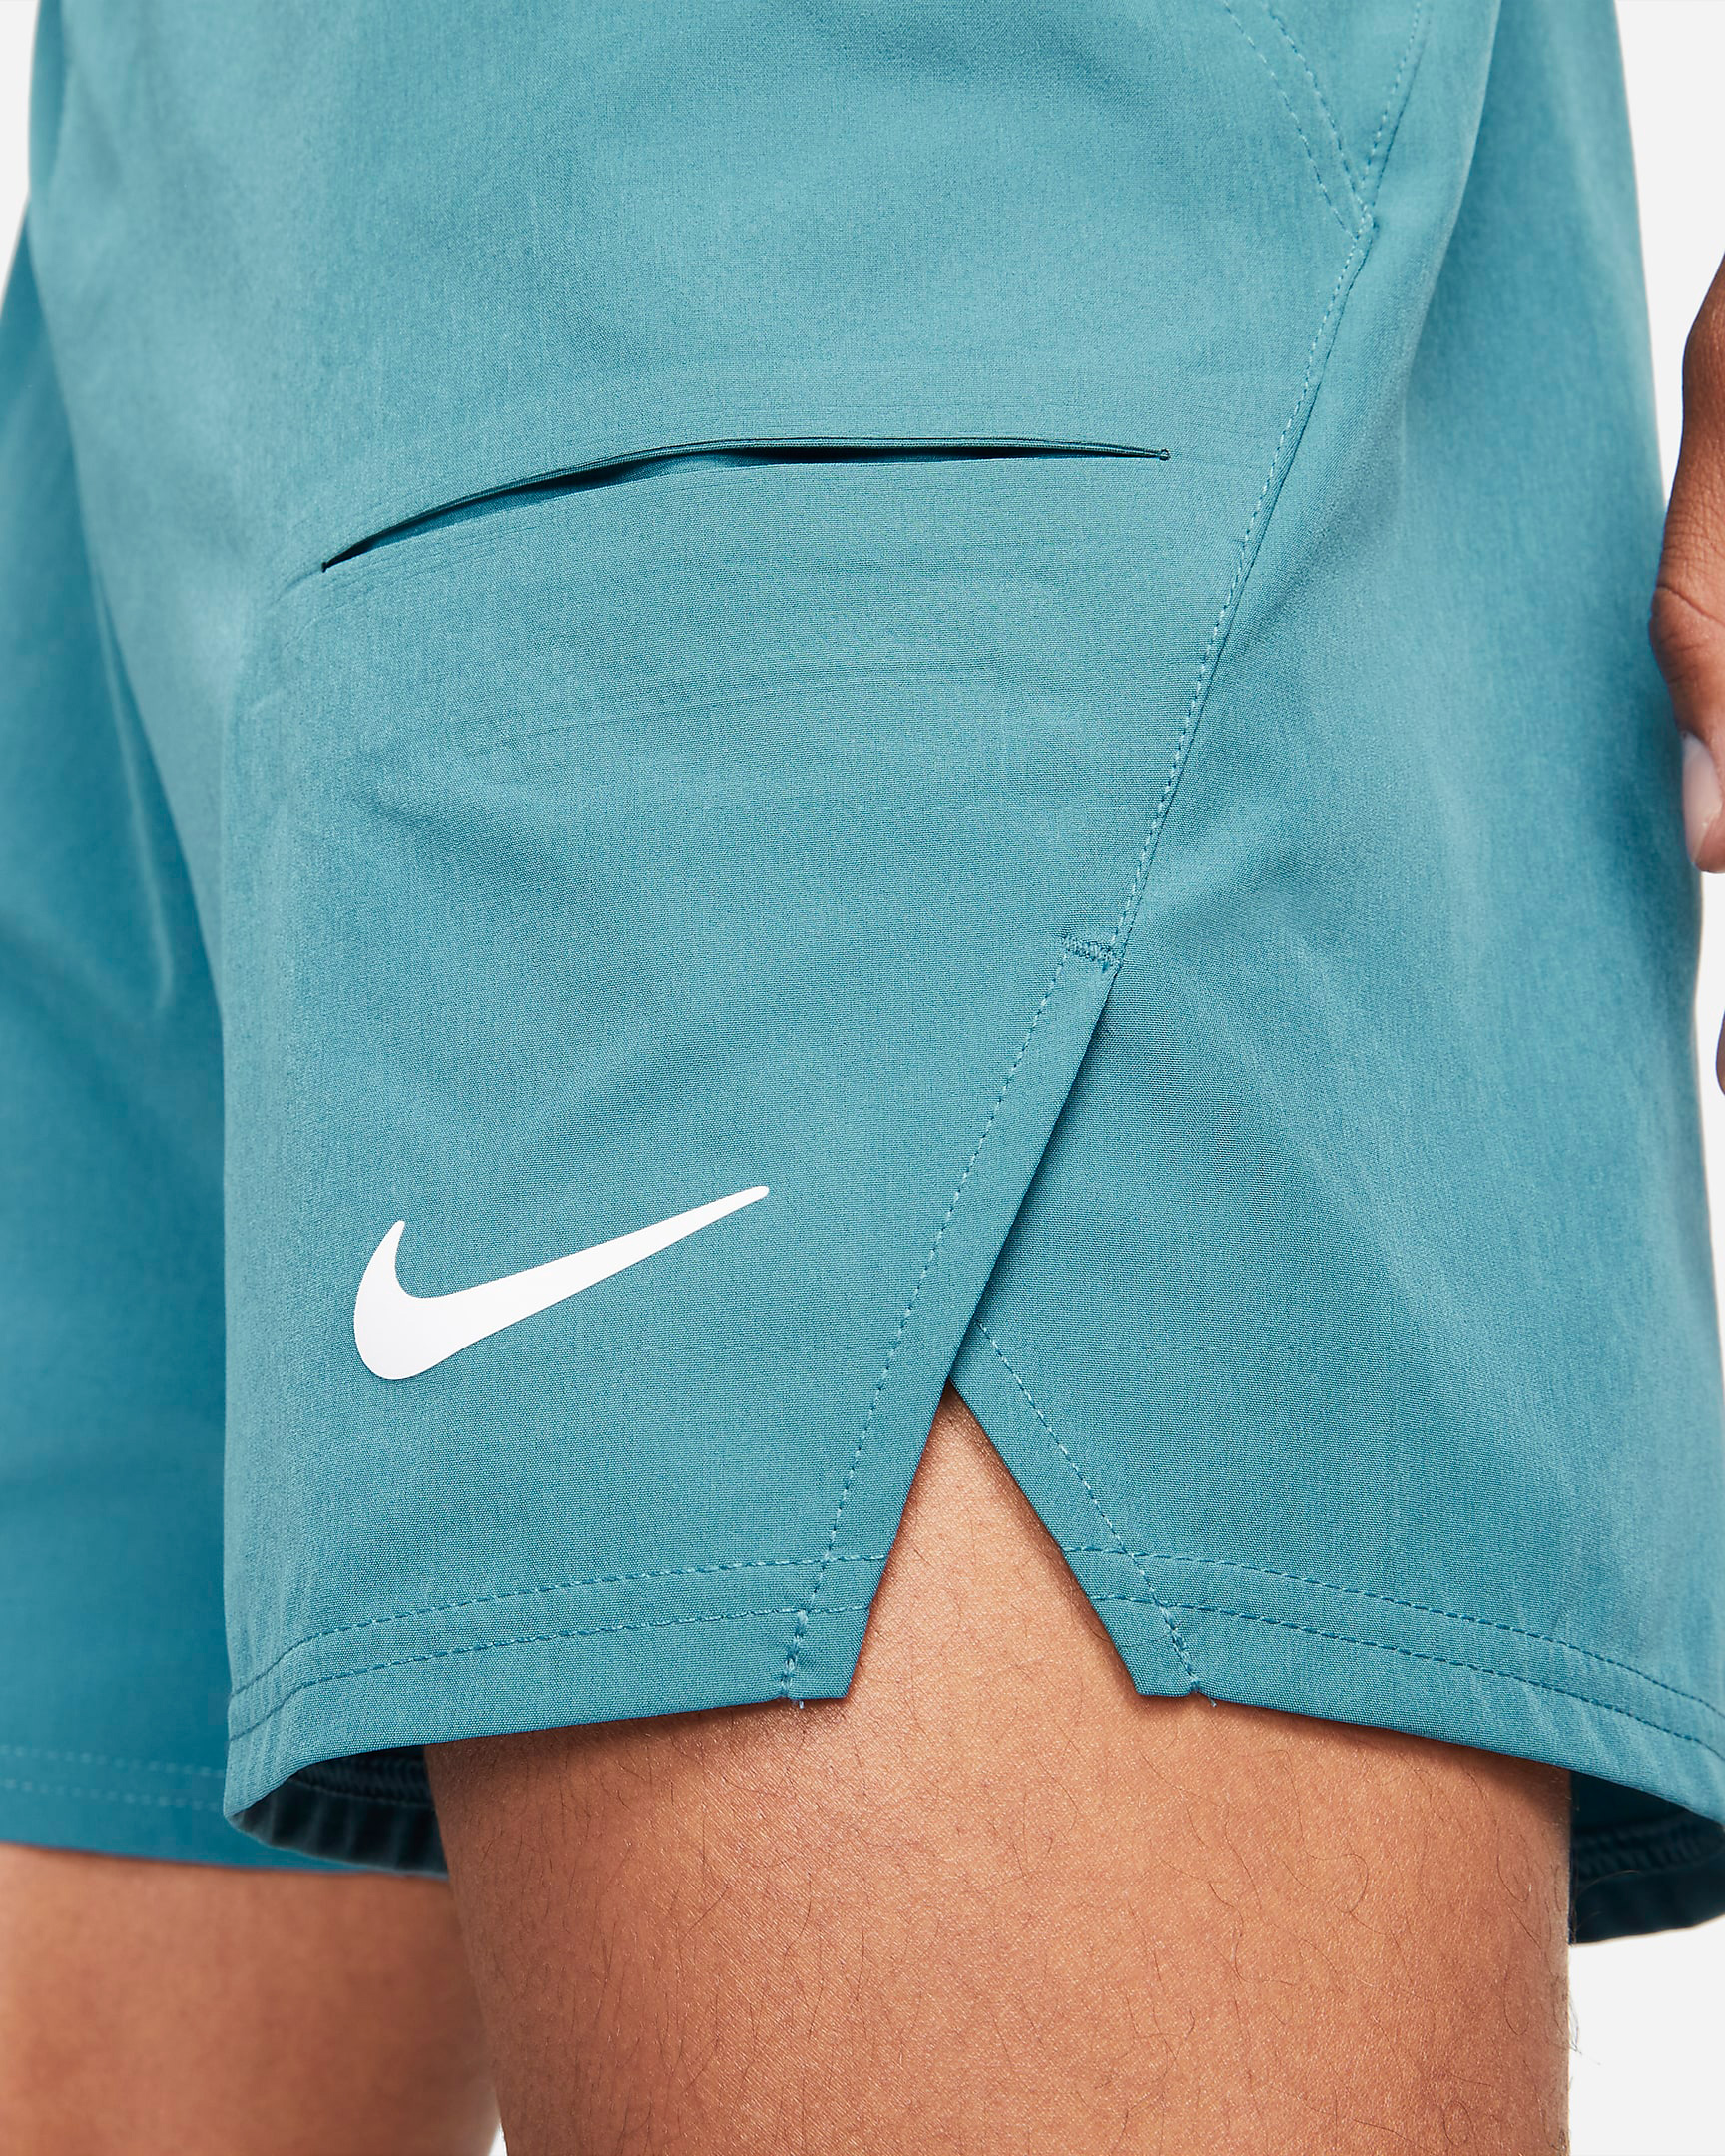 nike-rift-blue-tennis-shirt-shorts-3